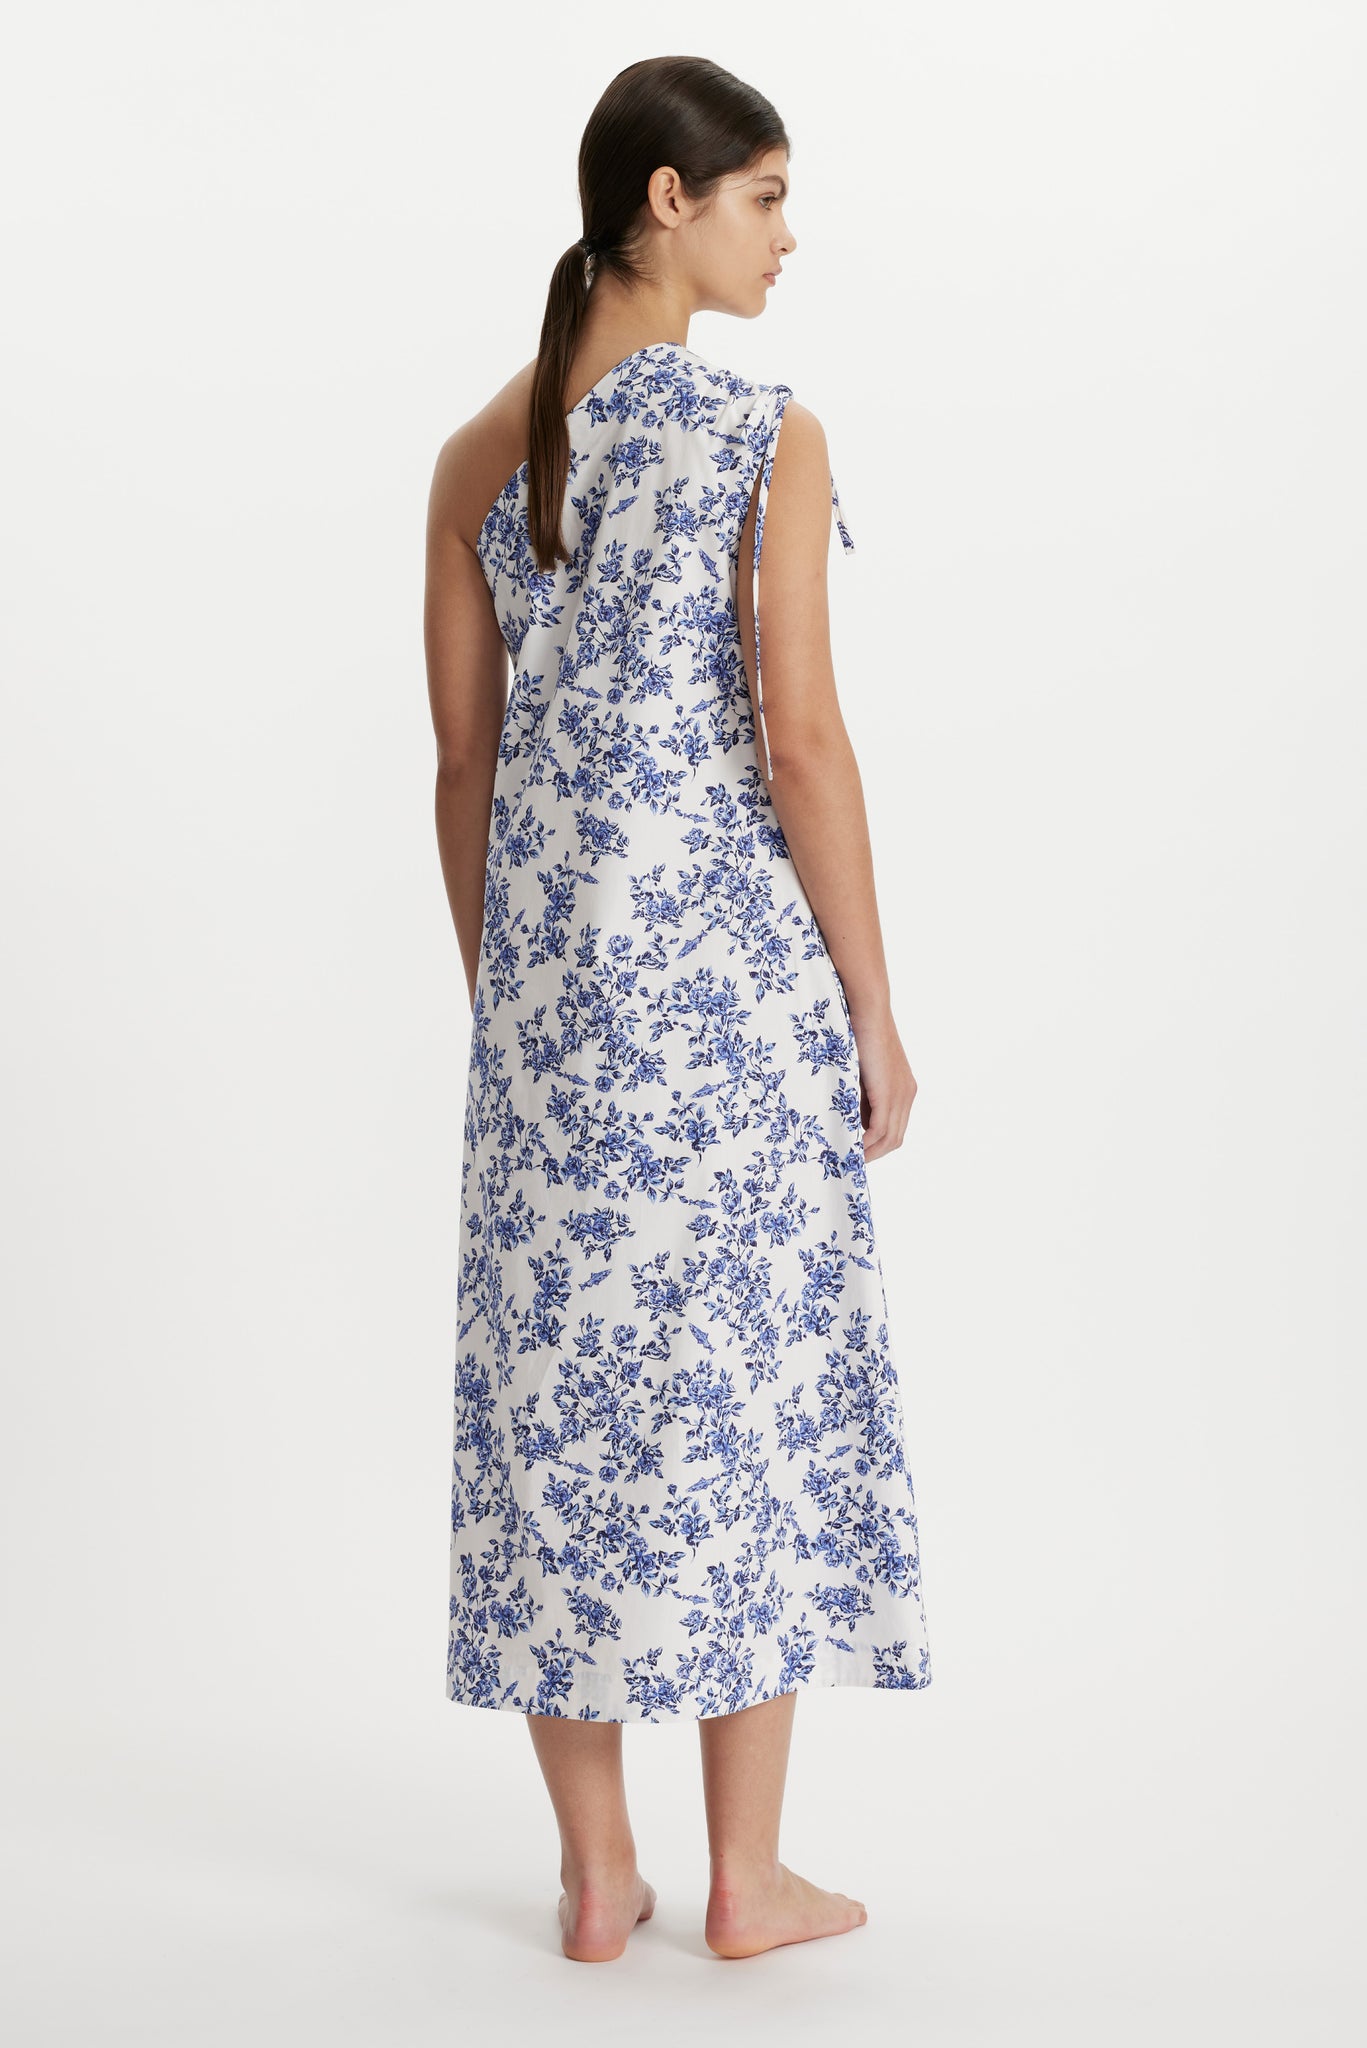 Solace Single Shoulder Dress in Blue Floral Print Cotton | Emilia Wickstead X Passalacqua